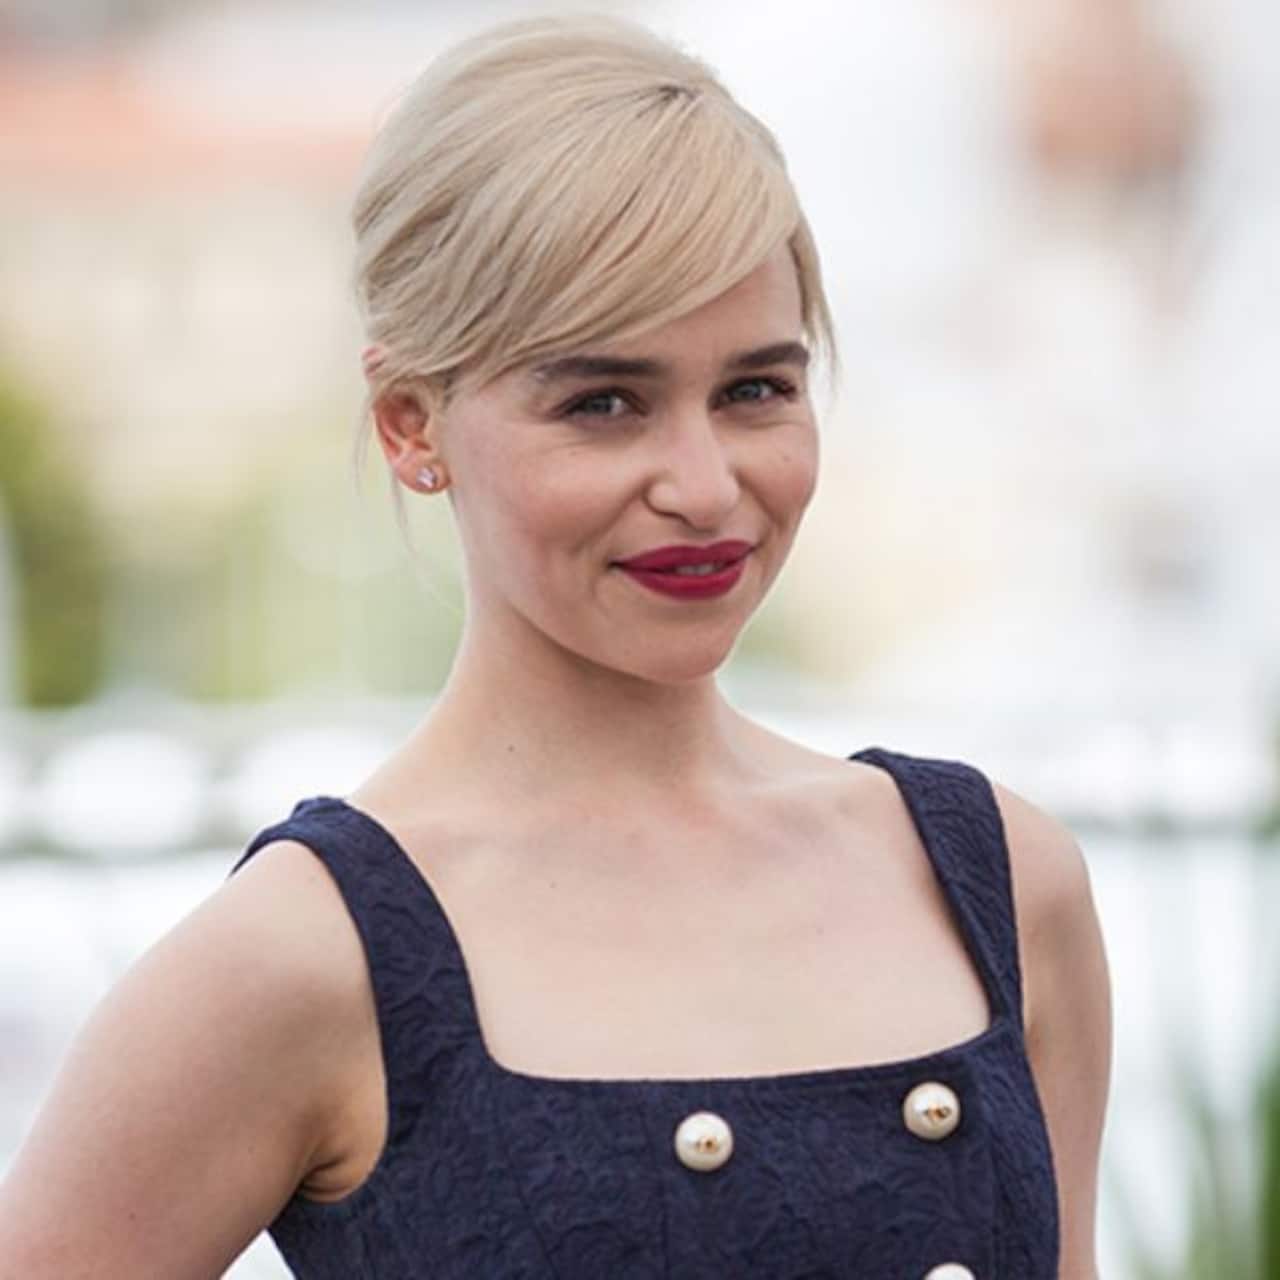 Emilia Clarke: “Game Of Thrones” star celebrate New Year 2020 in India